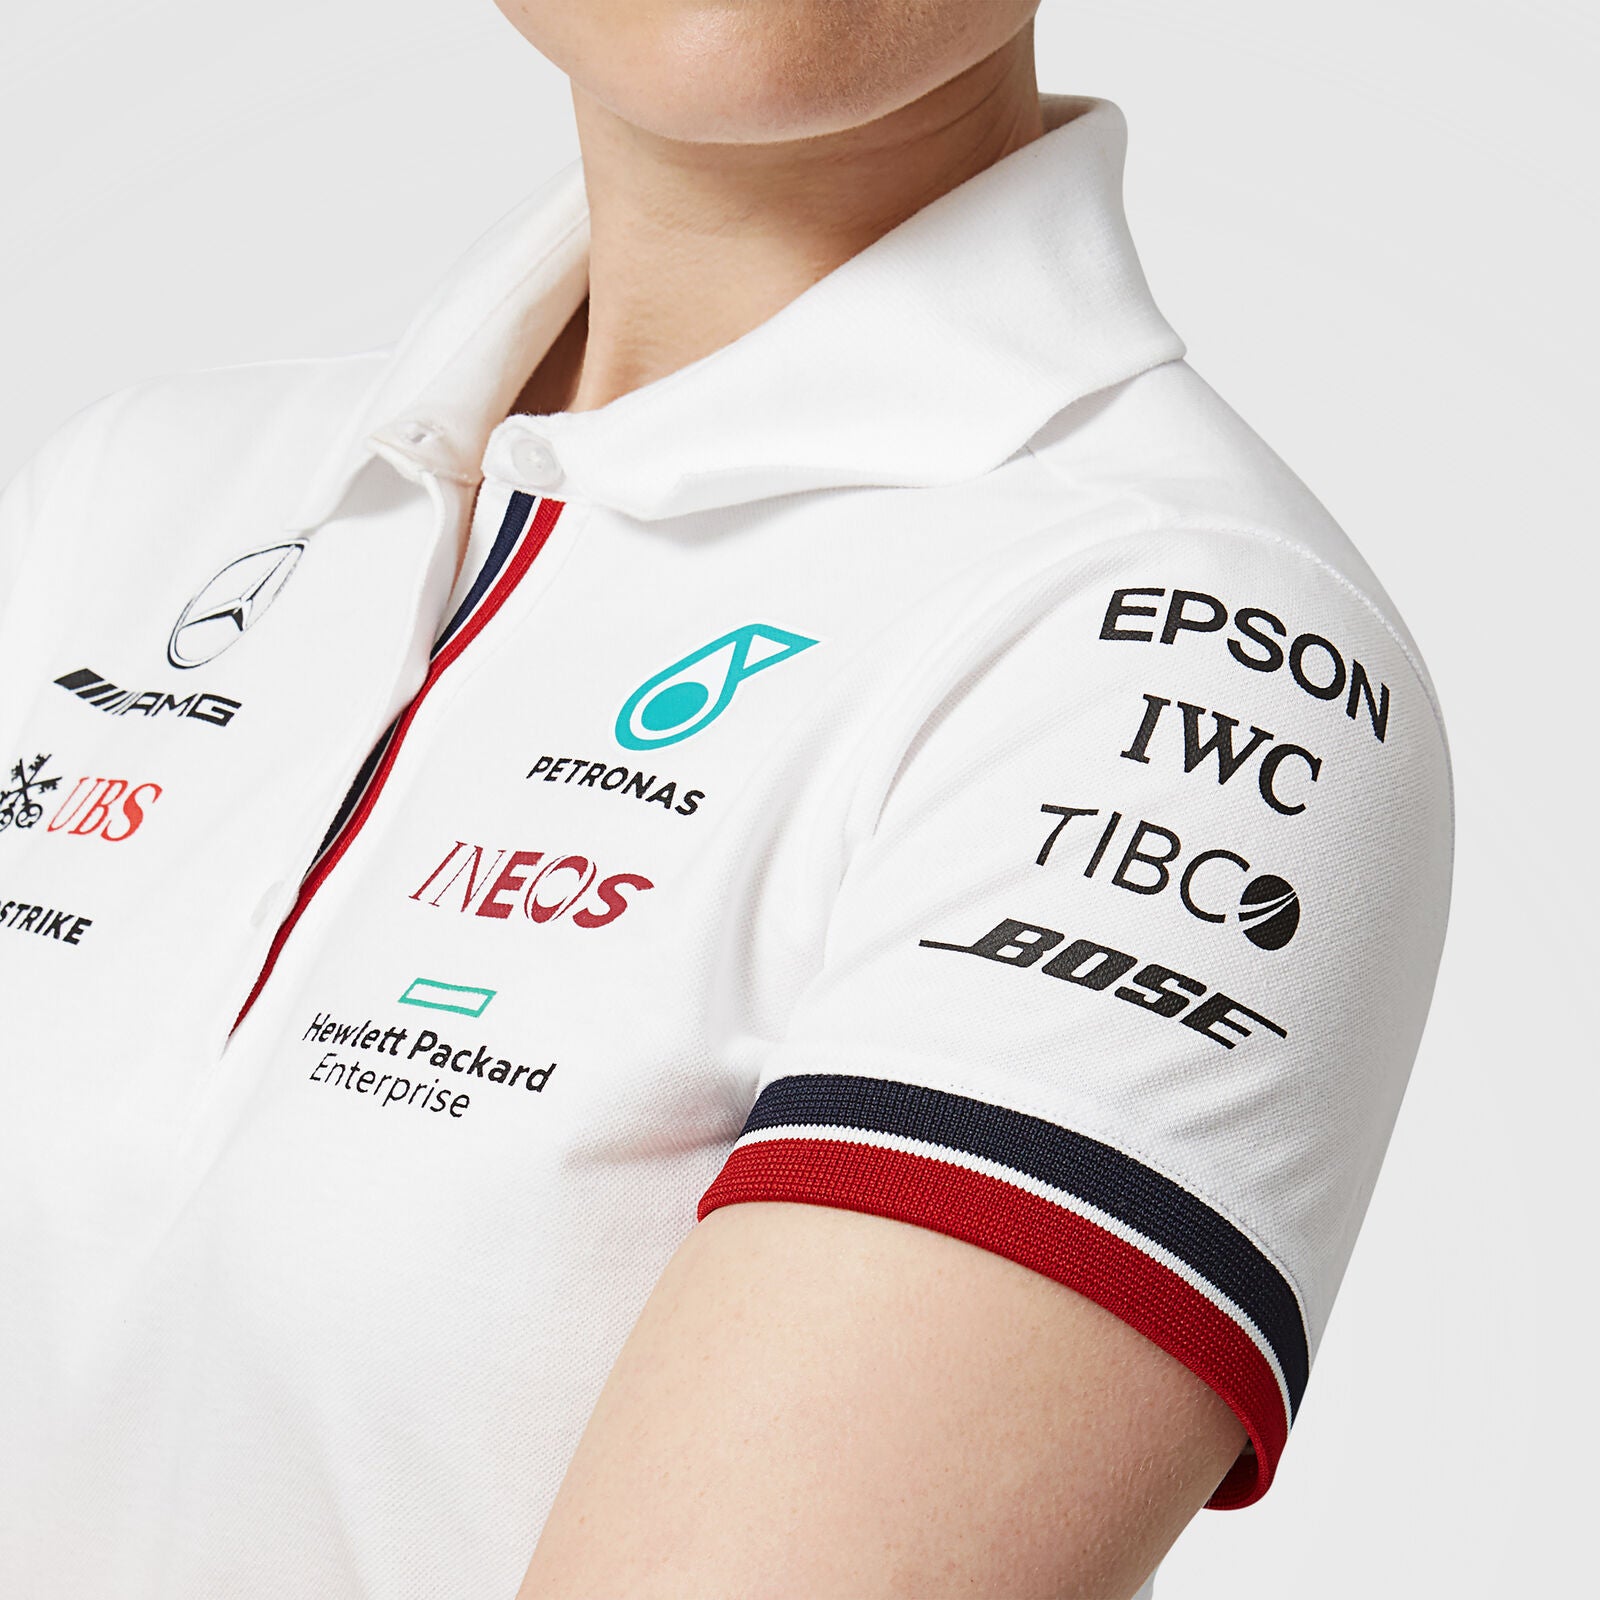 Mercedes Benz AMG Petronas F1 Women's 2021 Team Polo Shirt-Black